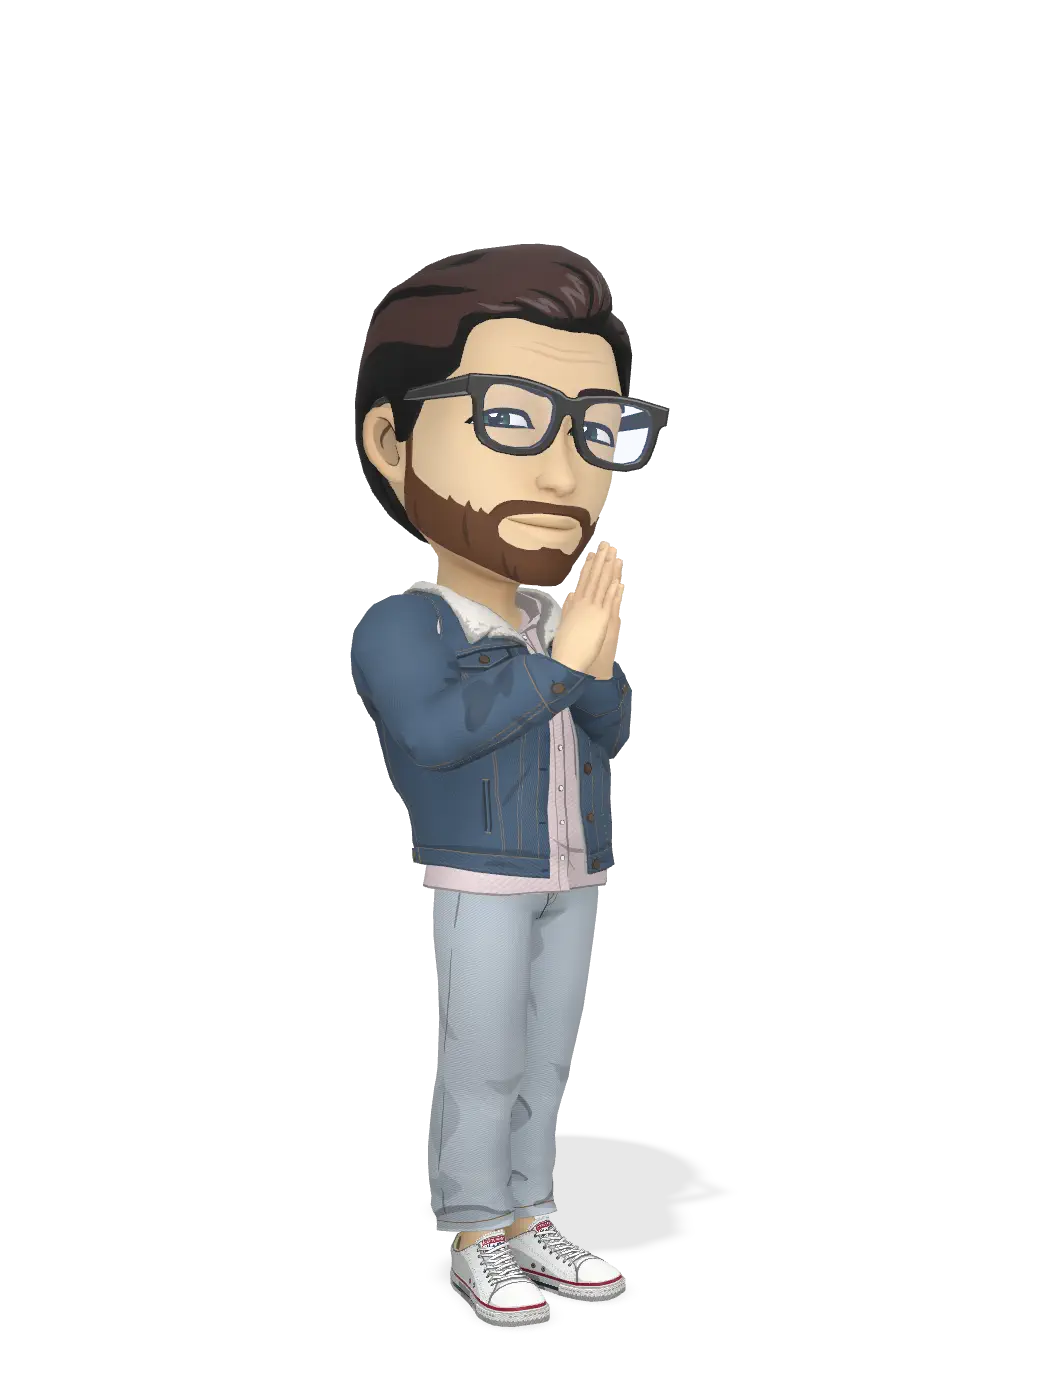 3D Bitmoji for rlopezsnap avatar